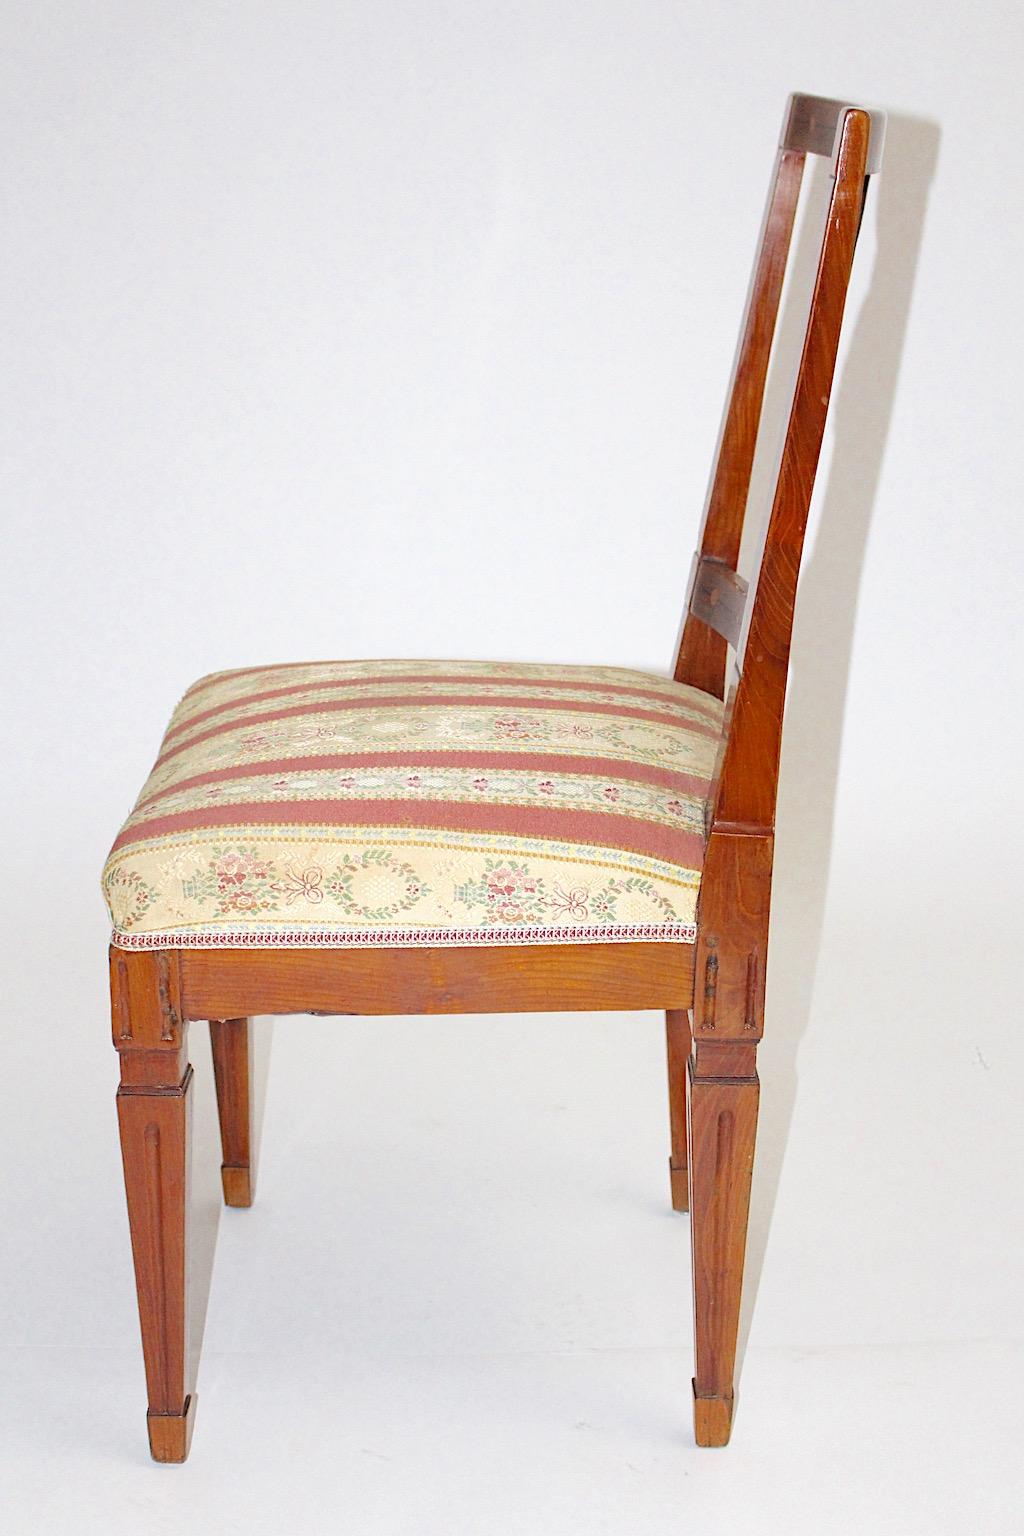 Cherrywood Maple Rustic Side Chair circa 1780 Austria For Sale 4